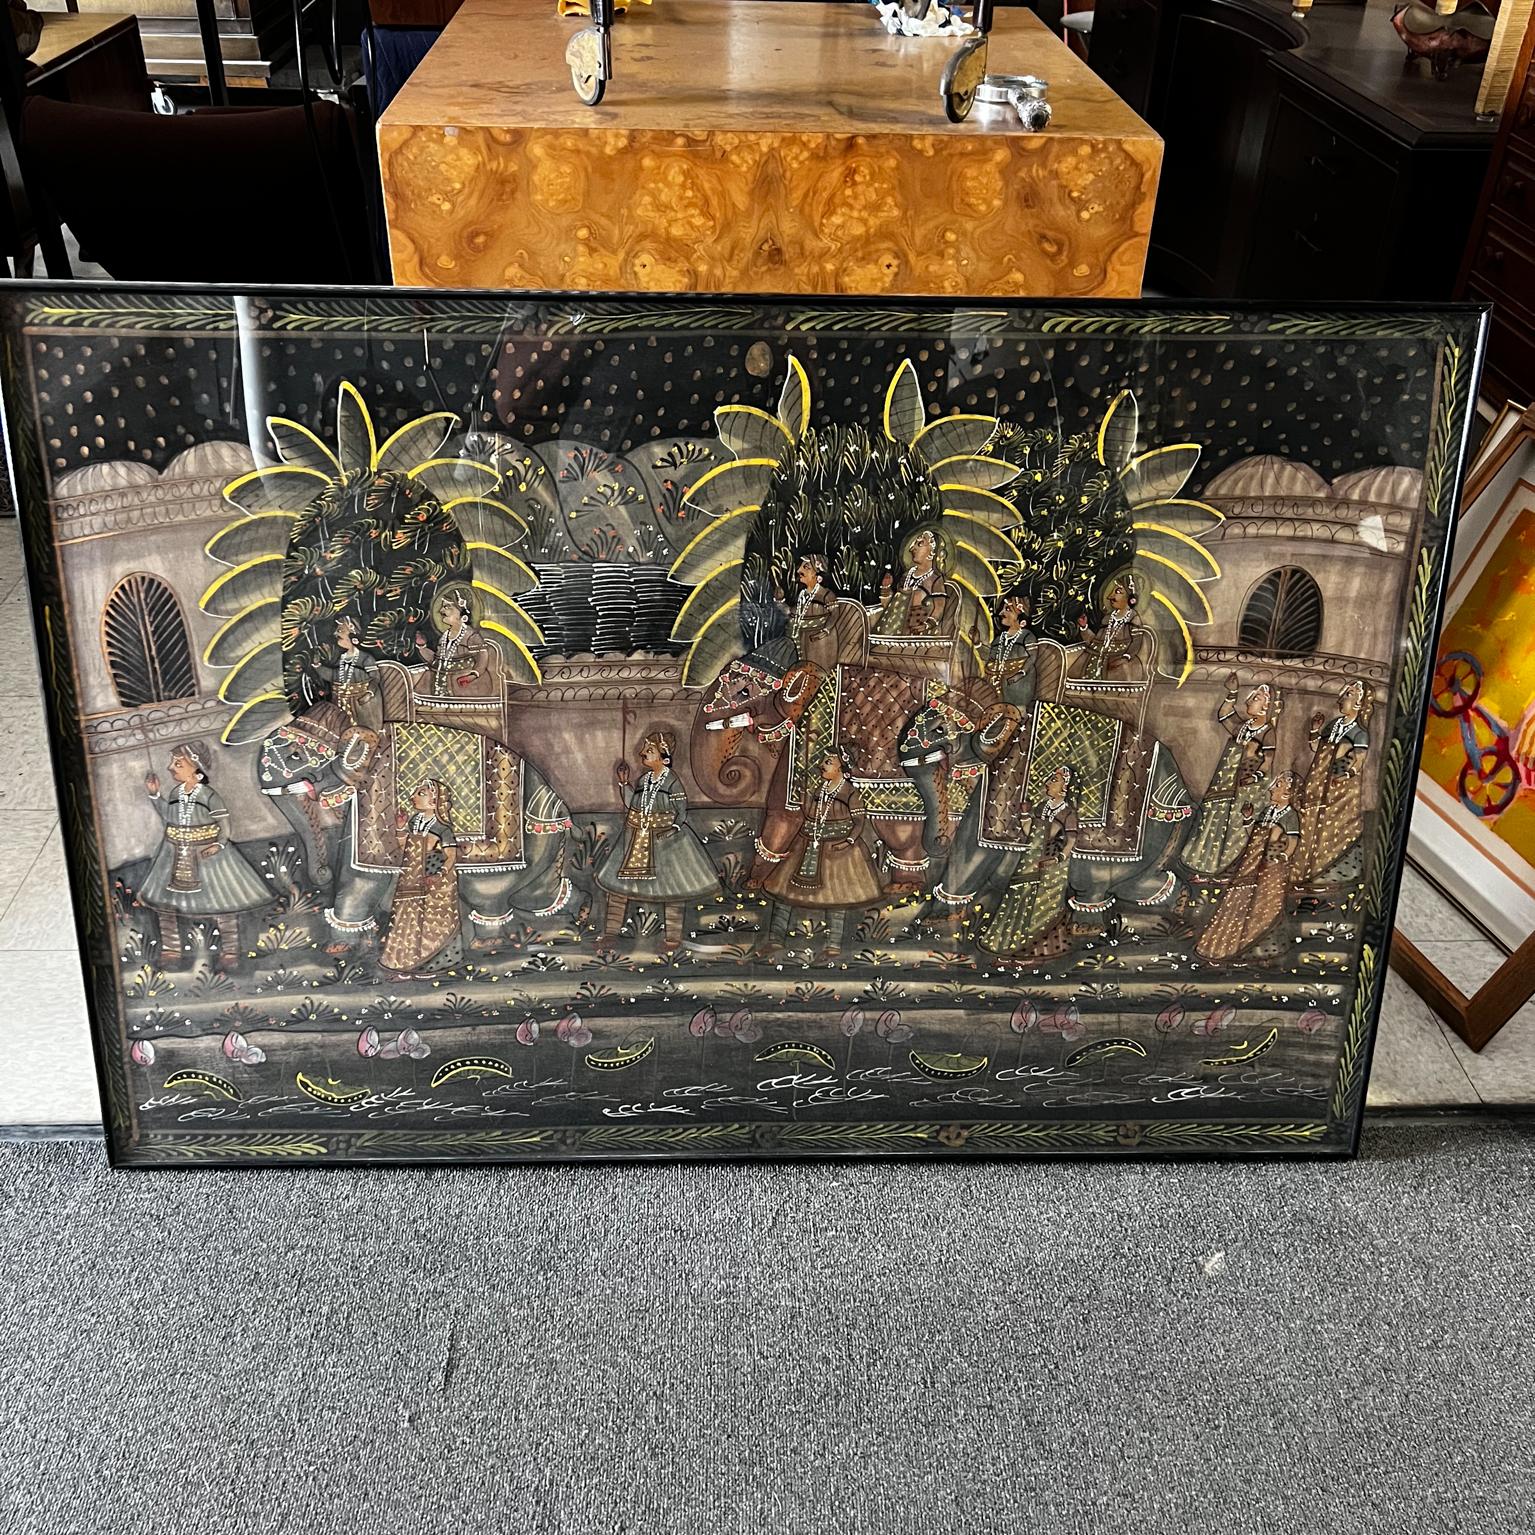 1950s India Batik Art Regal Procession Elephant Pageantry
Framed Batik Art
Ink on Silk
54.25 x 36 x 1
Original vintage condition
Please refer to images.